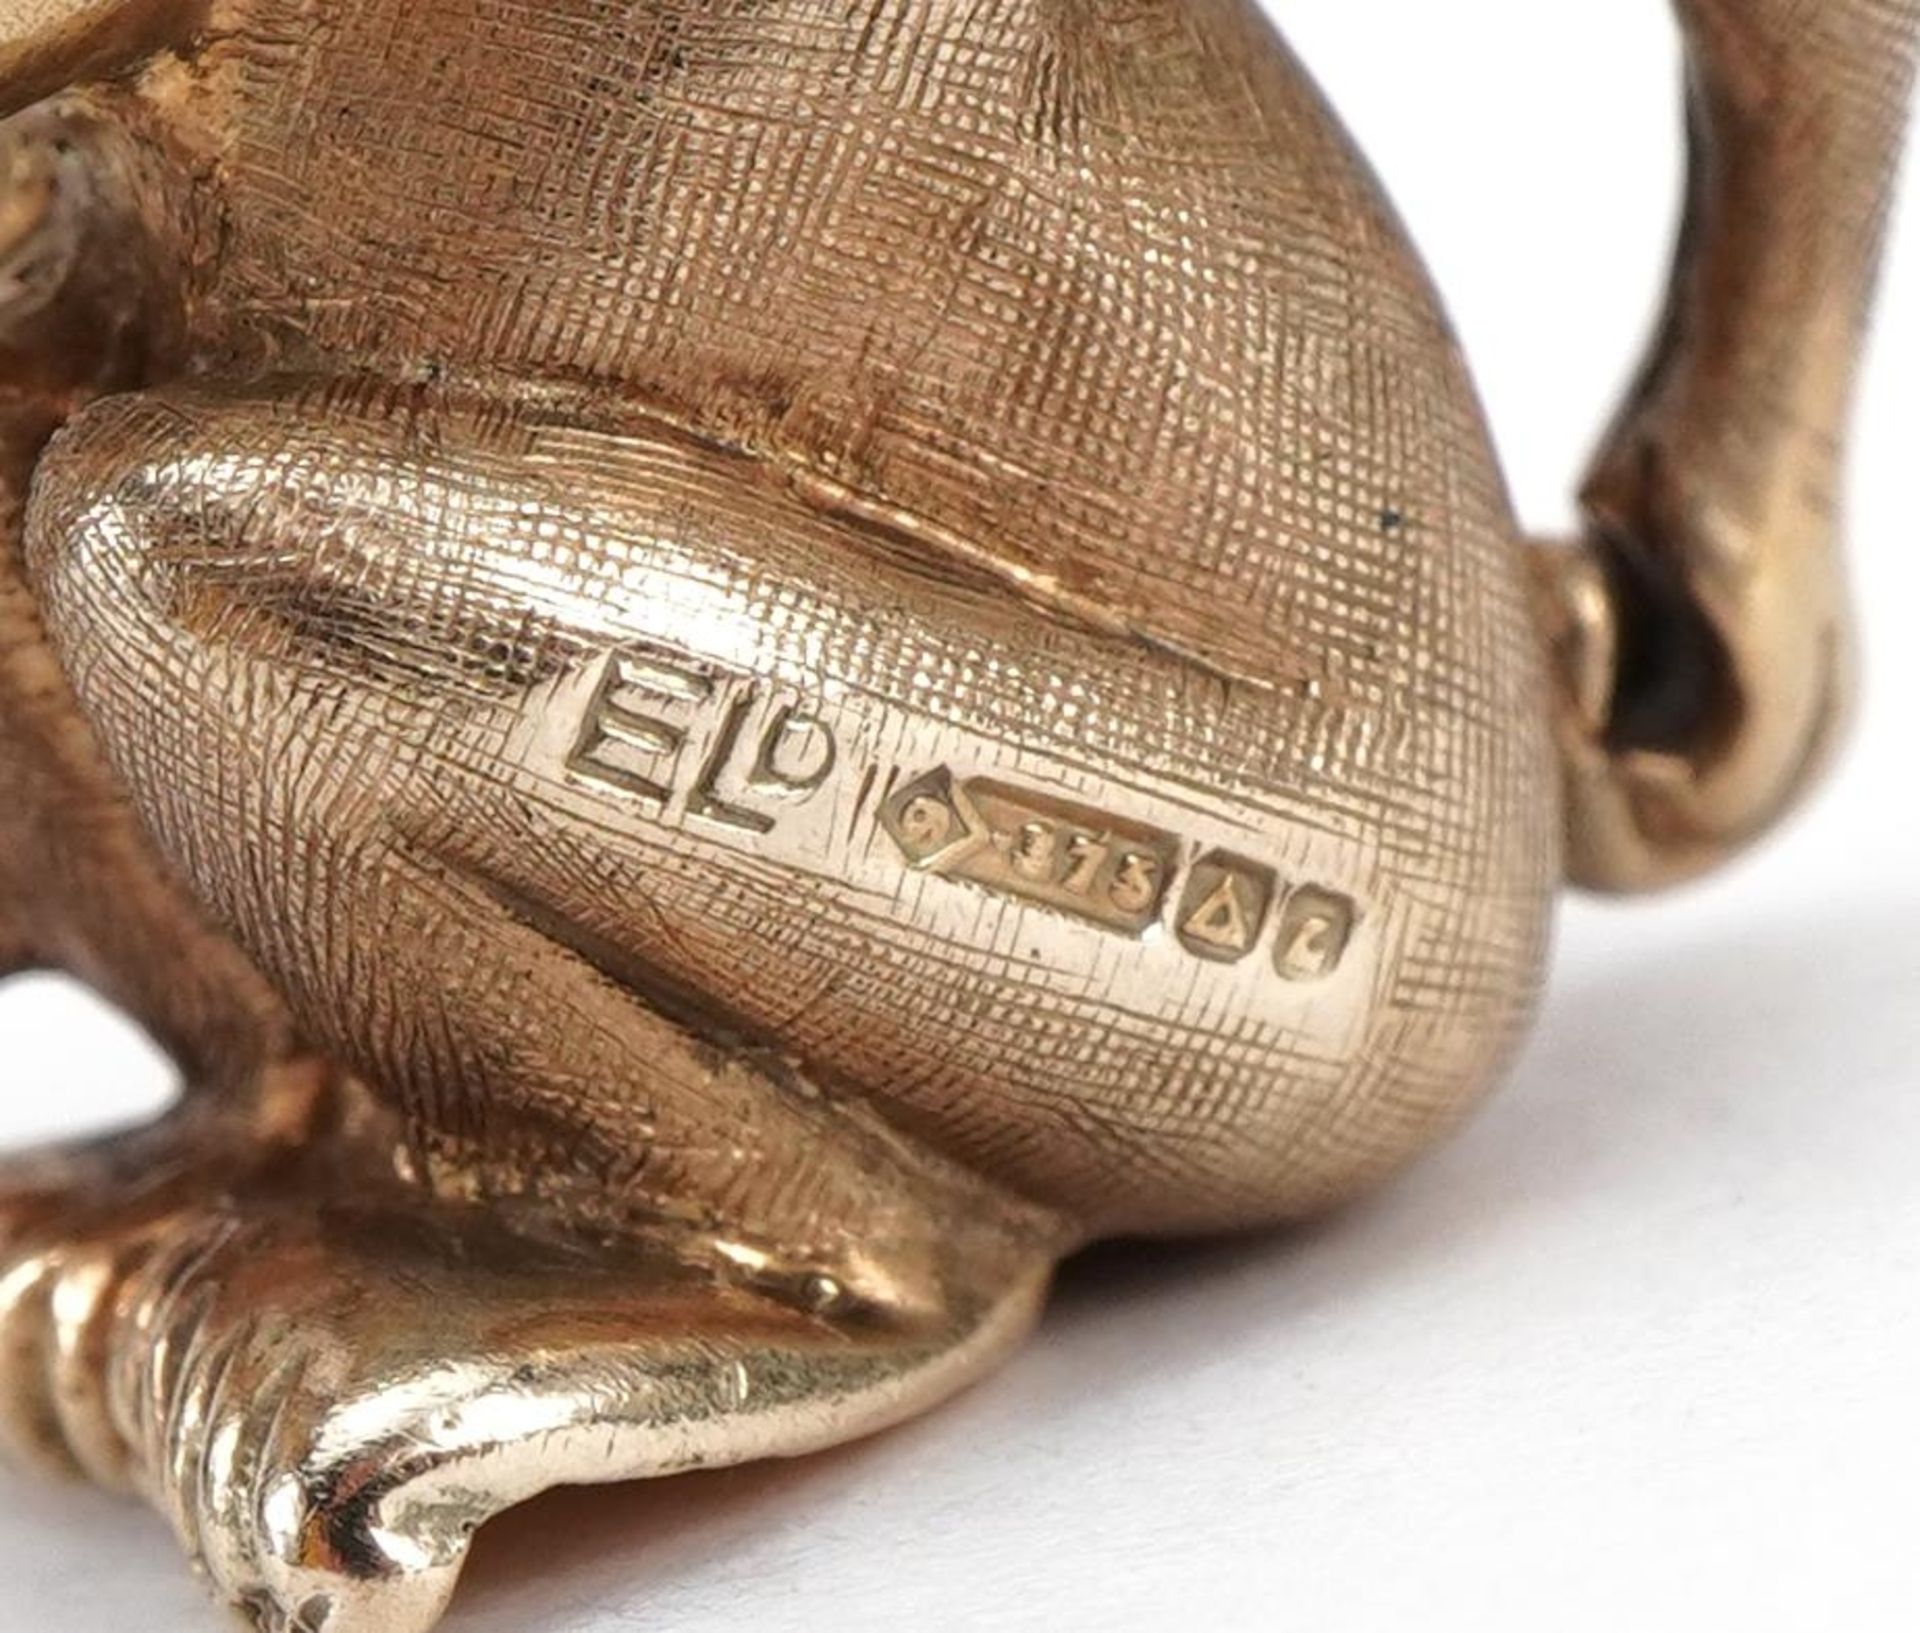 9ct gold monkey pendant with ruby set eyes, 2.3cm high, 6.8g - Image 2 of 3